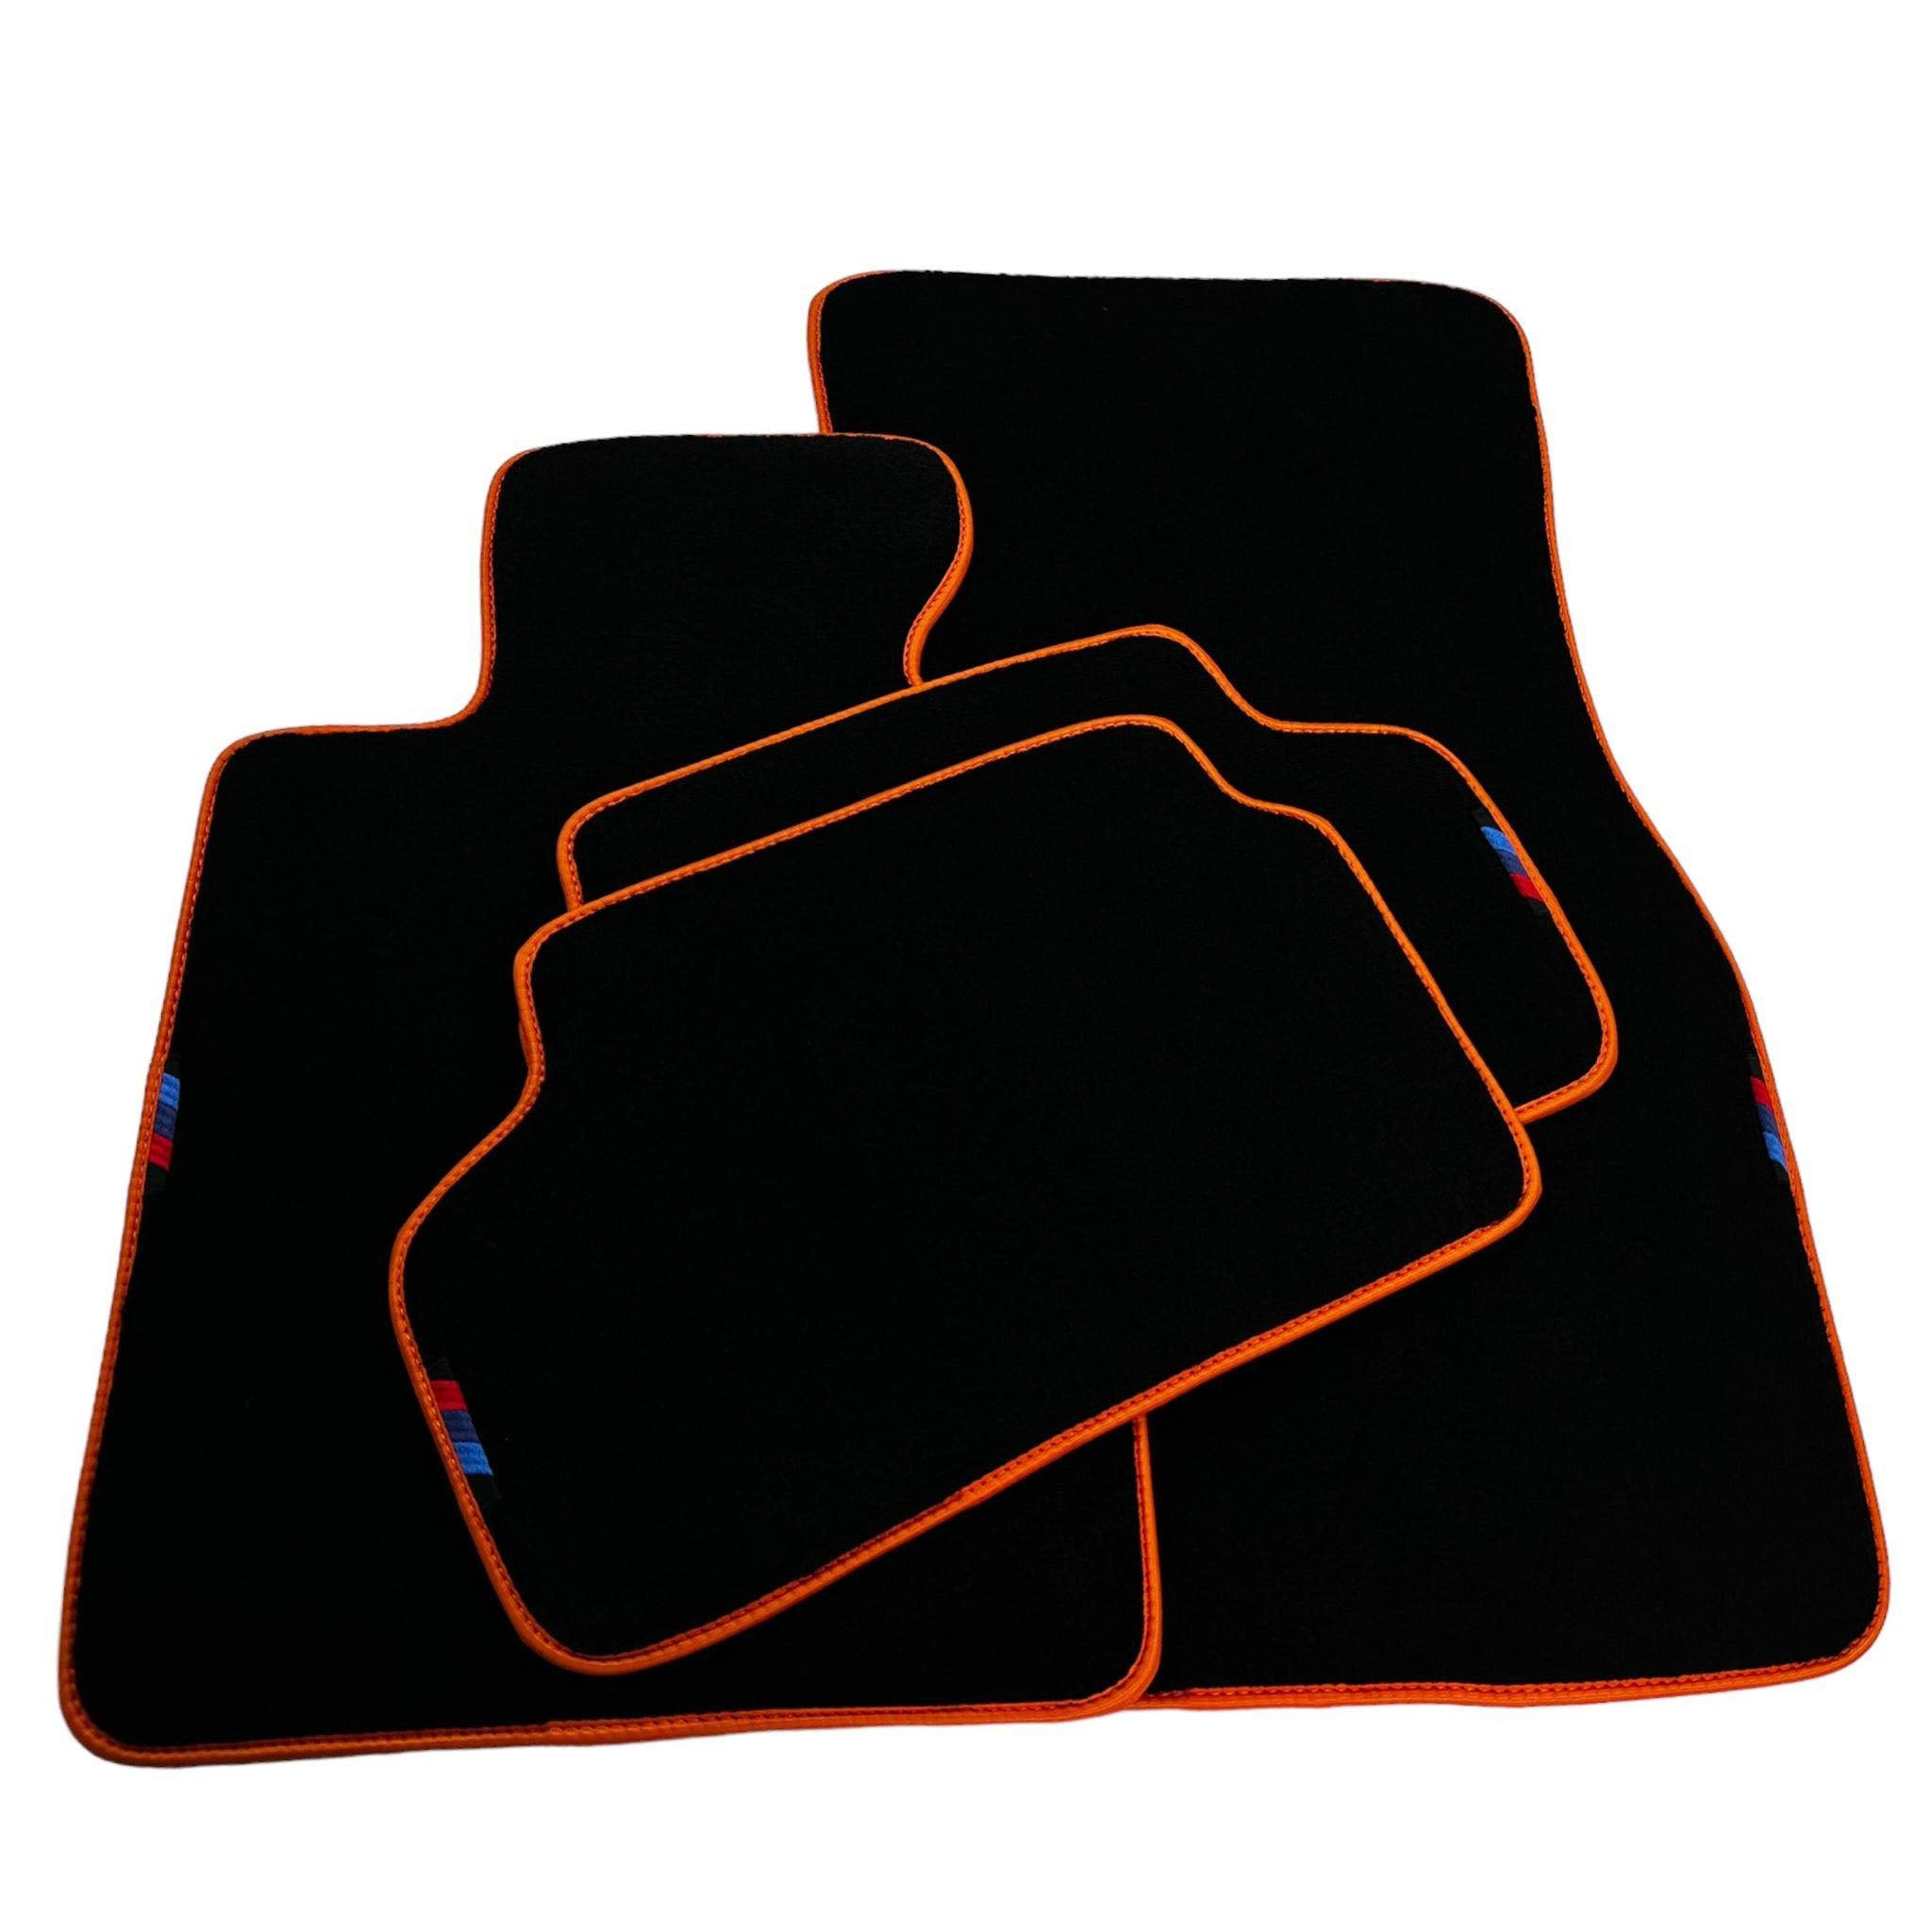 Black Floor Floor Mats For BMW 6 Series F12 | Fighter Jet Edition AutoWin Brand |Orange Trim